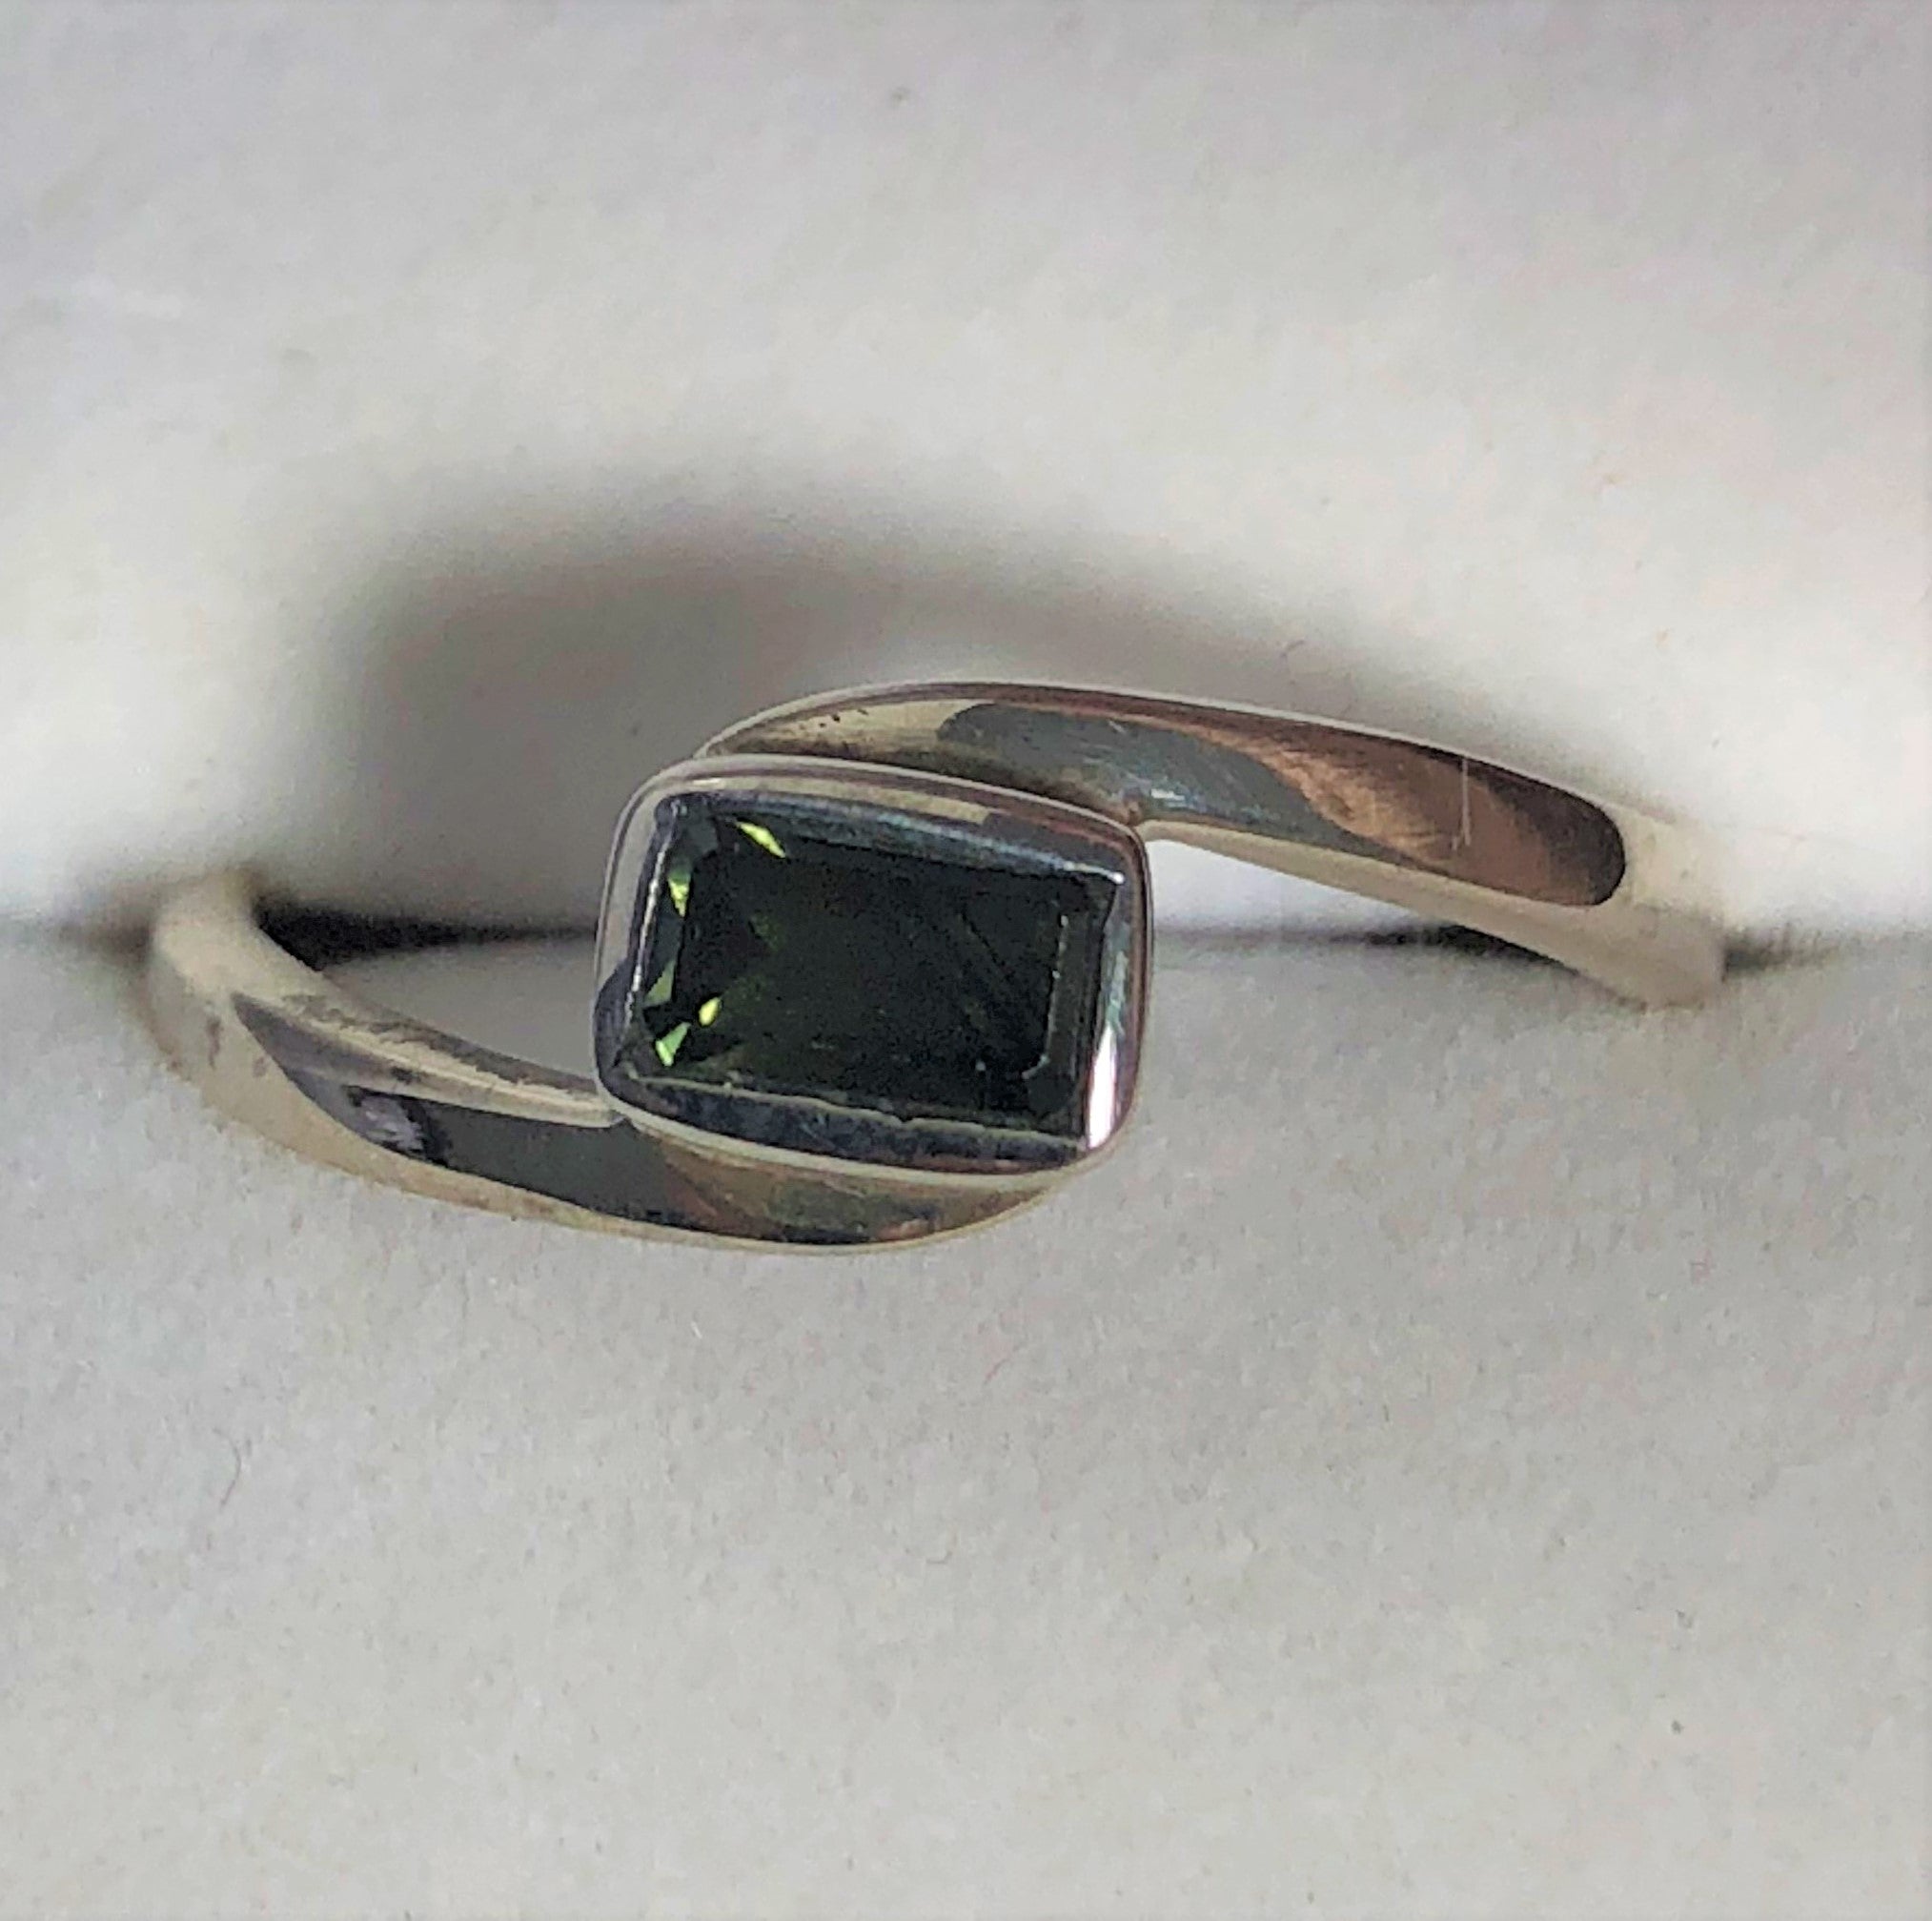 Australian Green Sapphire Ring